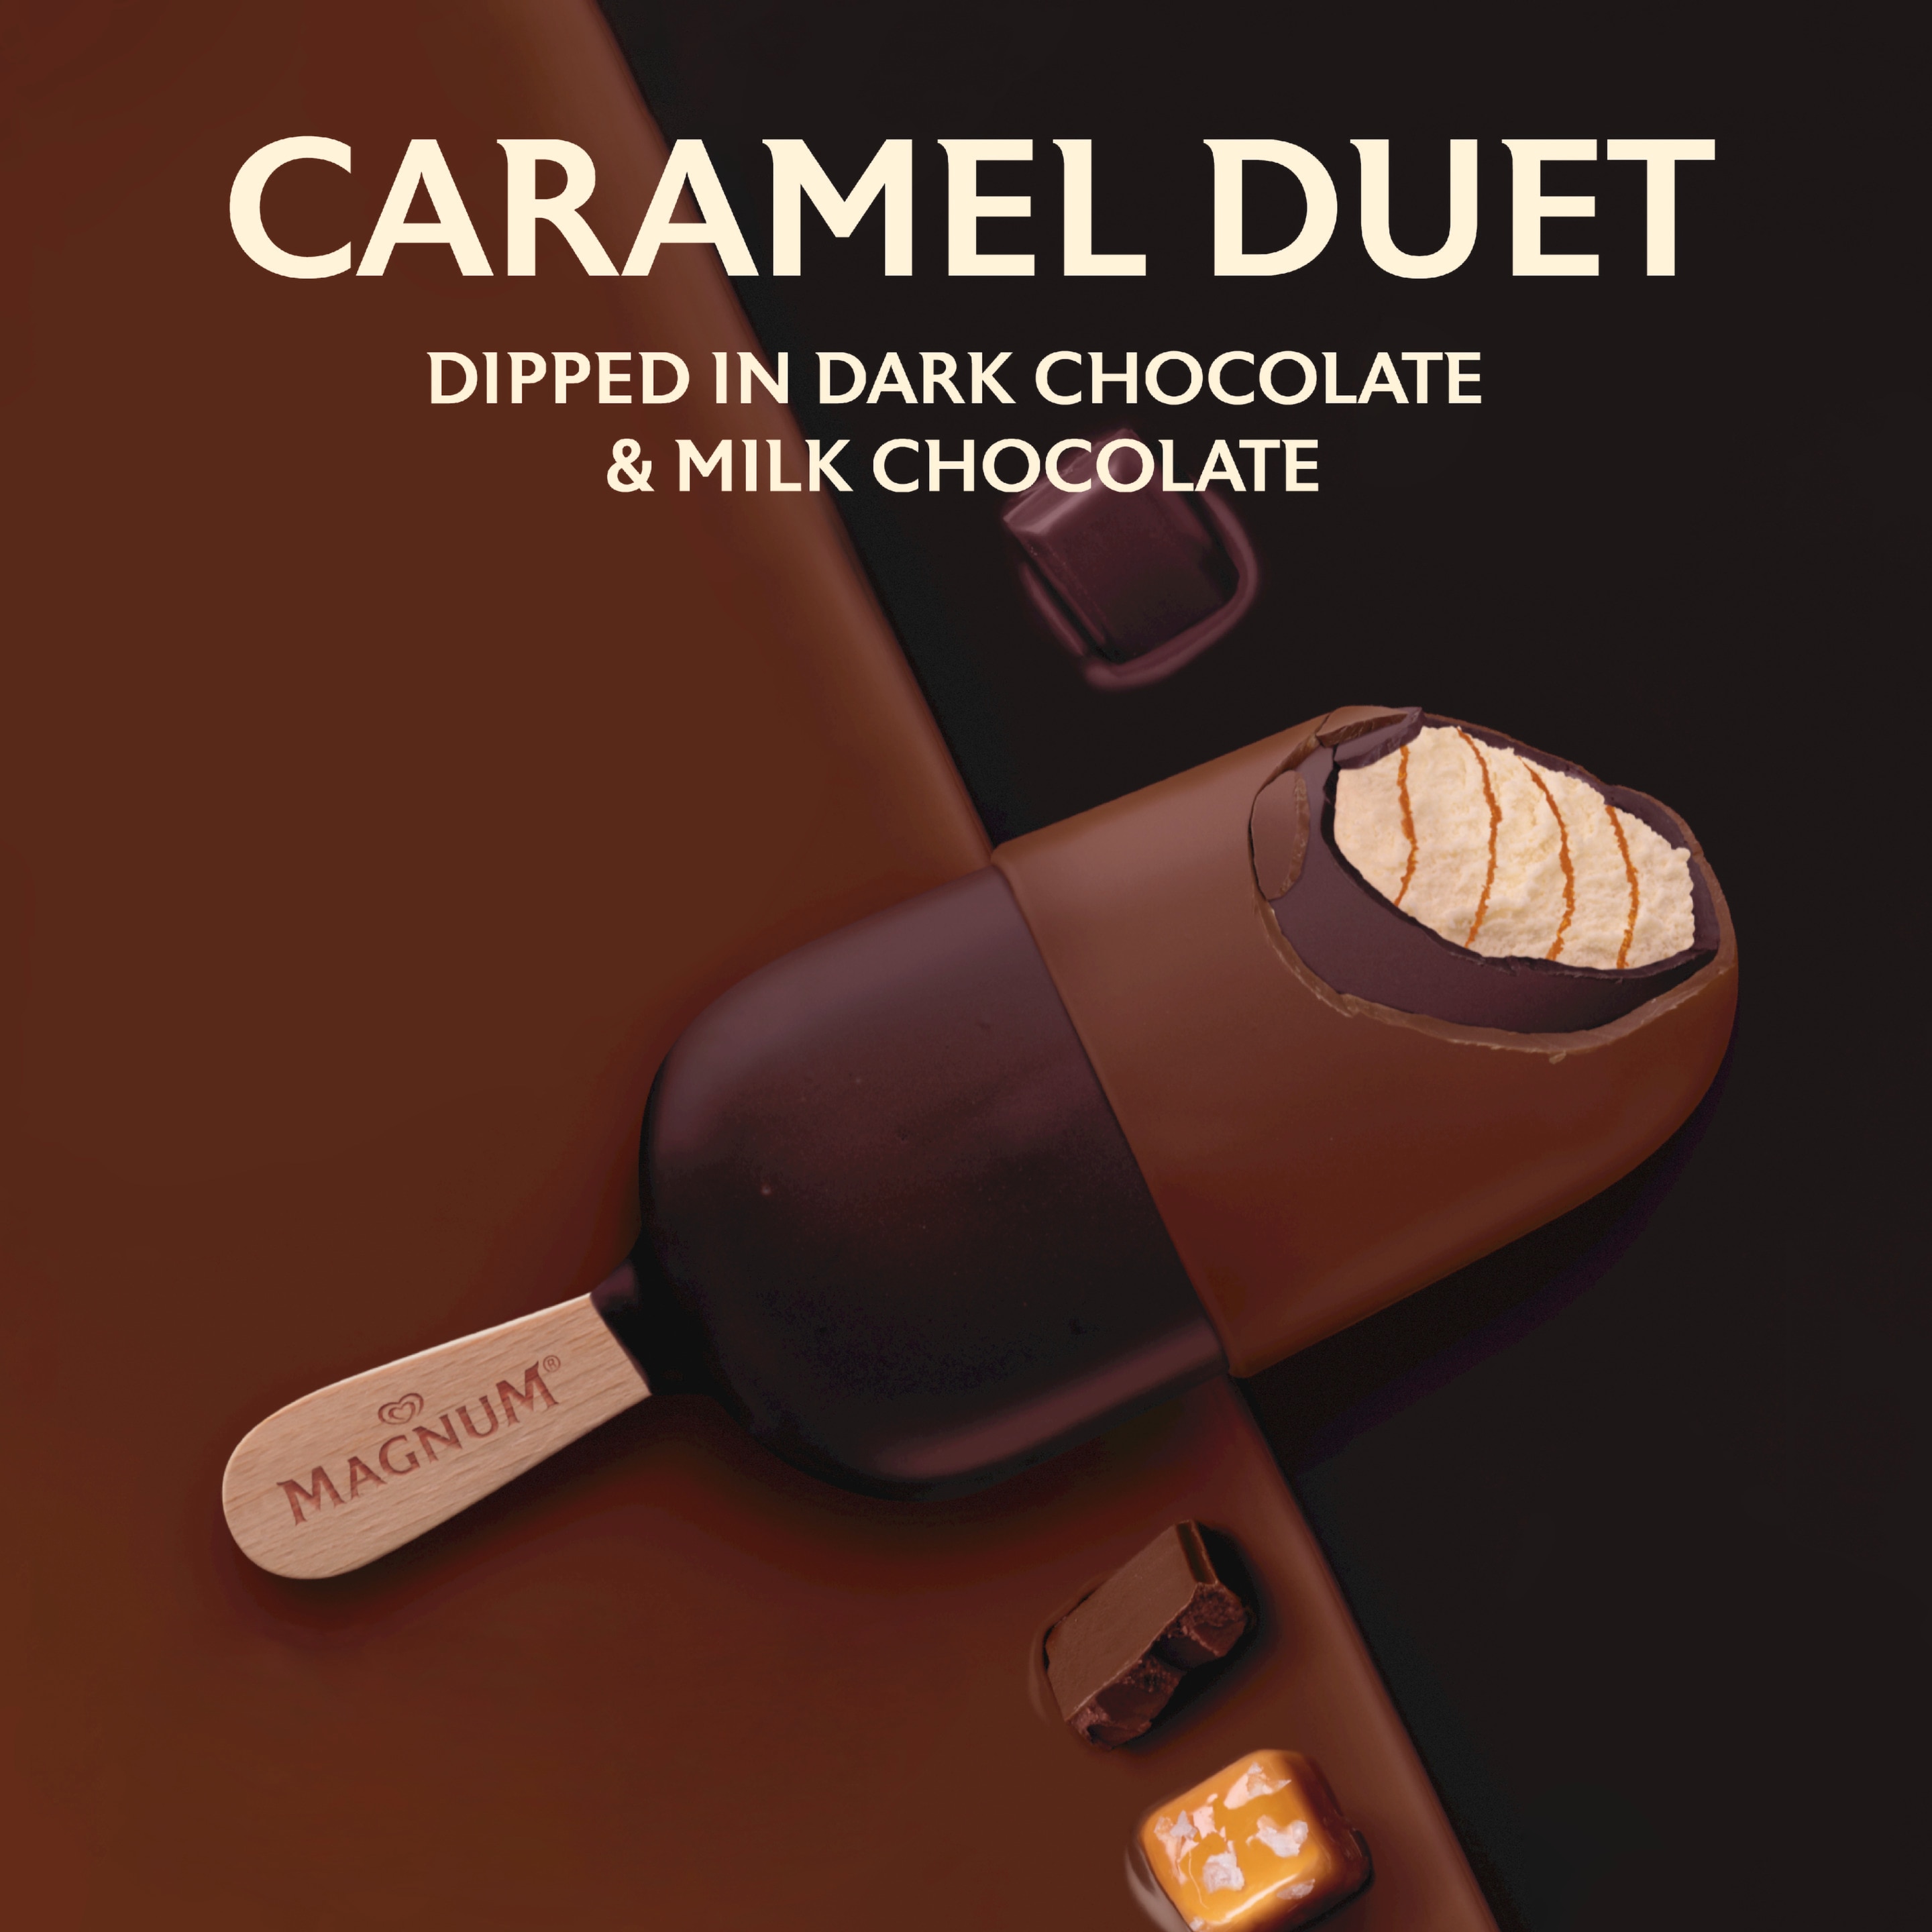 Caramel Duet Ice Cream Bar